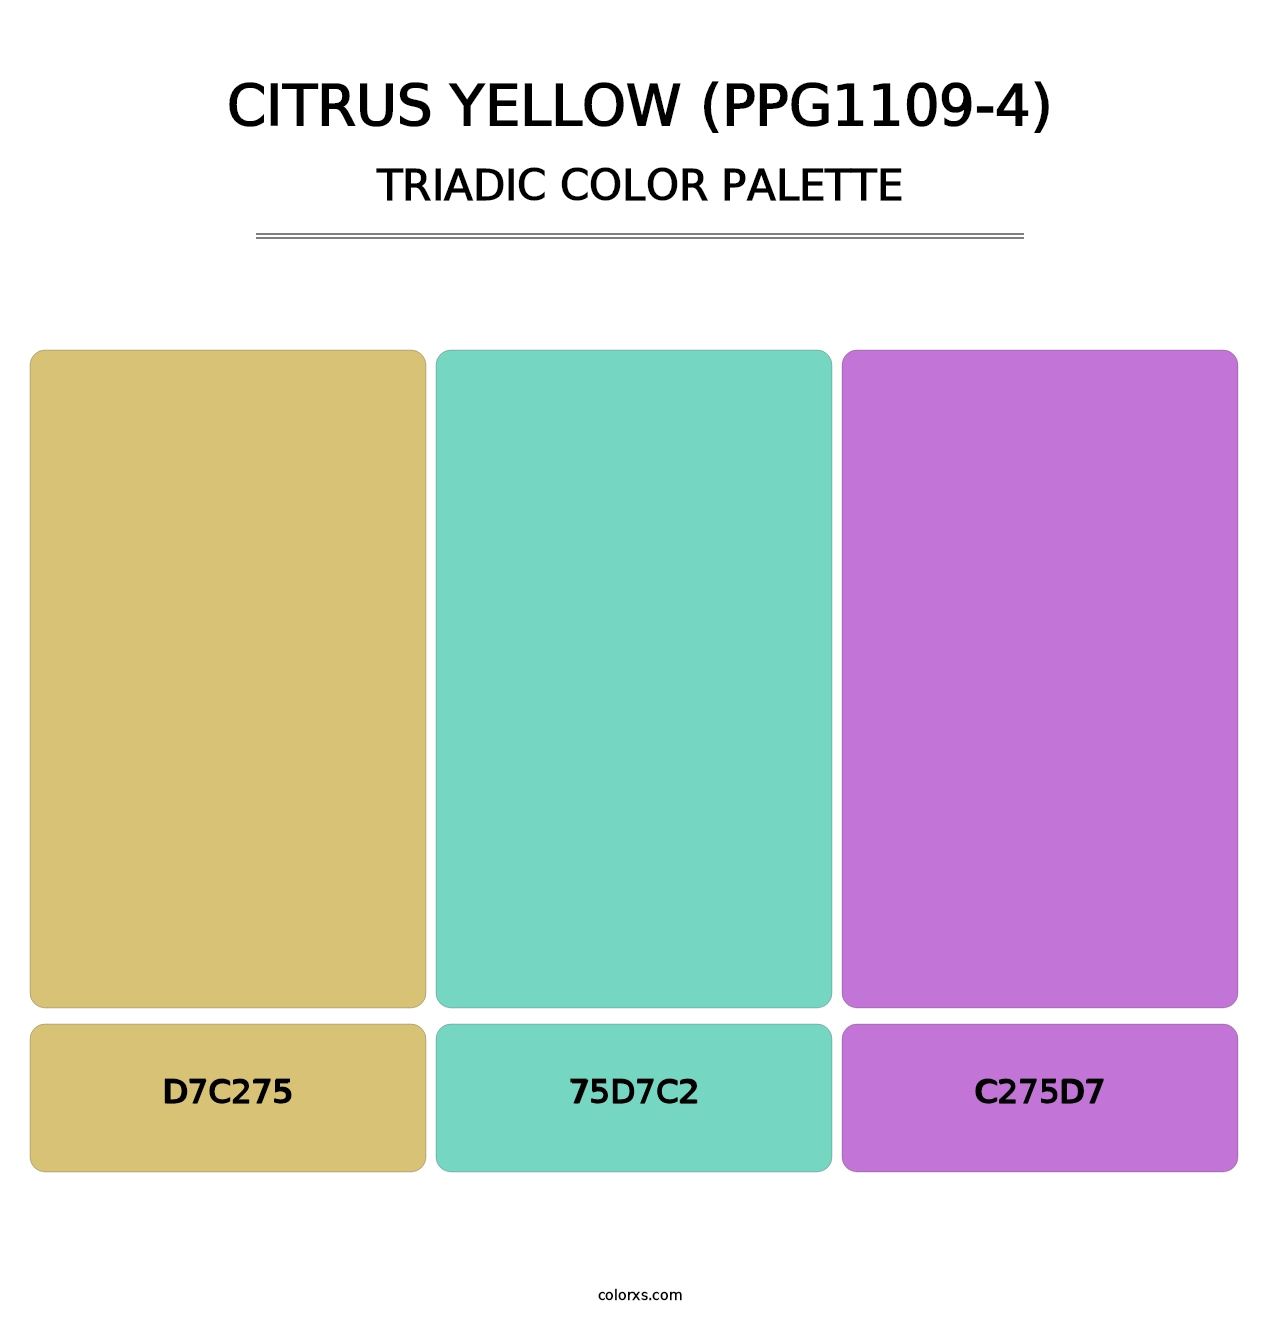 Citrus Yellow (PPG1109-4) - Triadic Color Palette